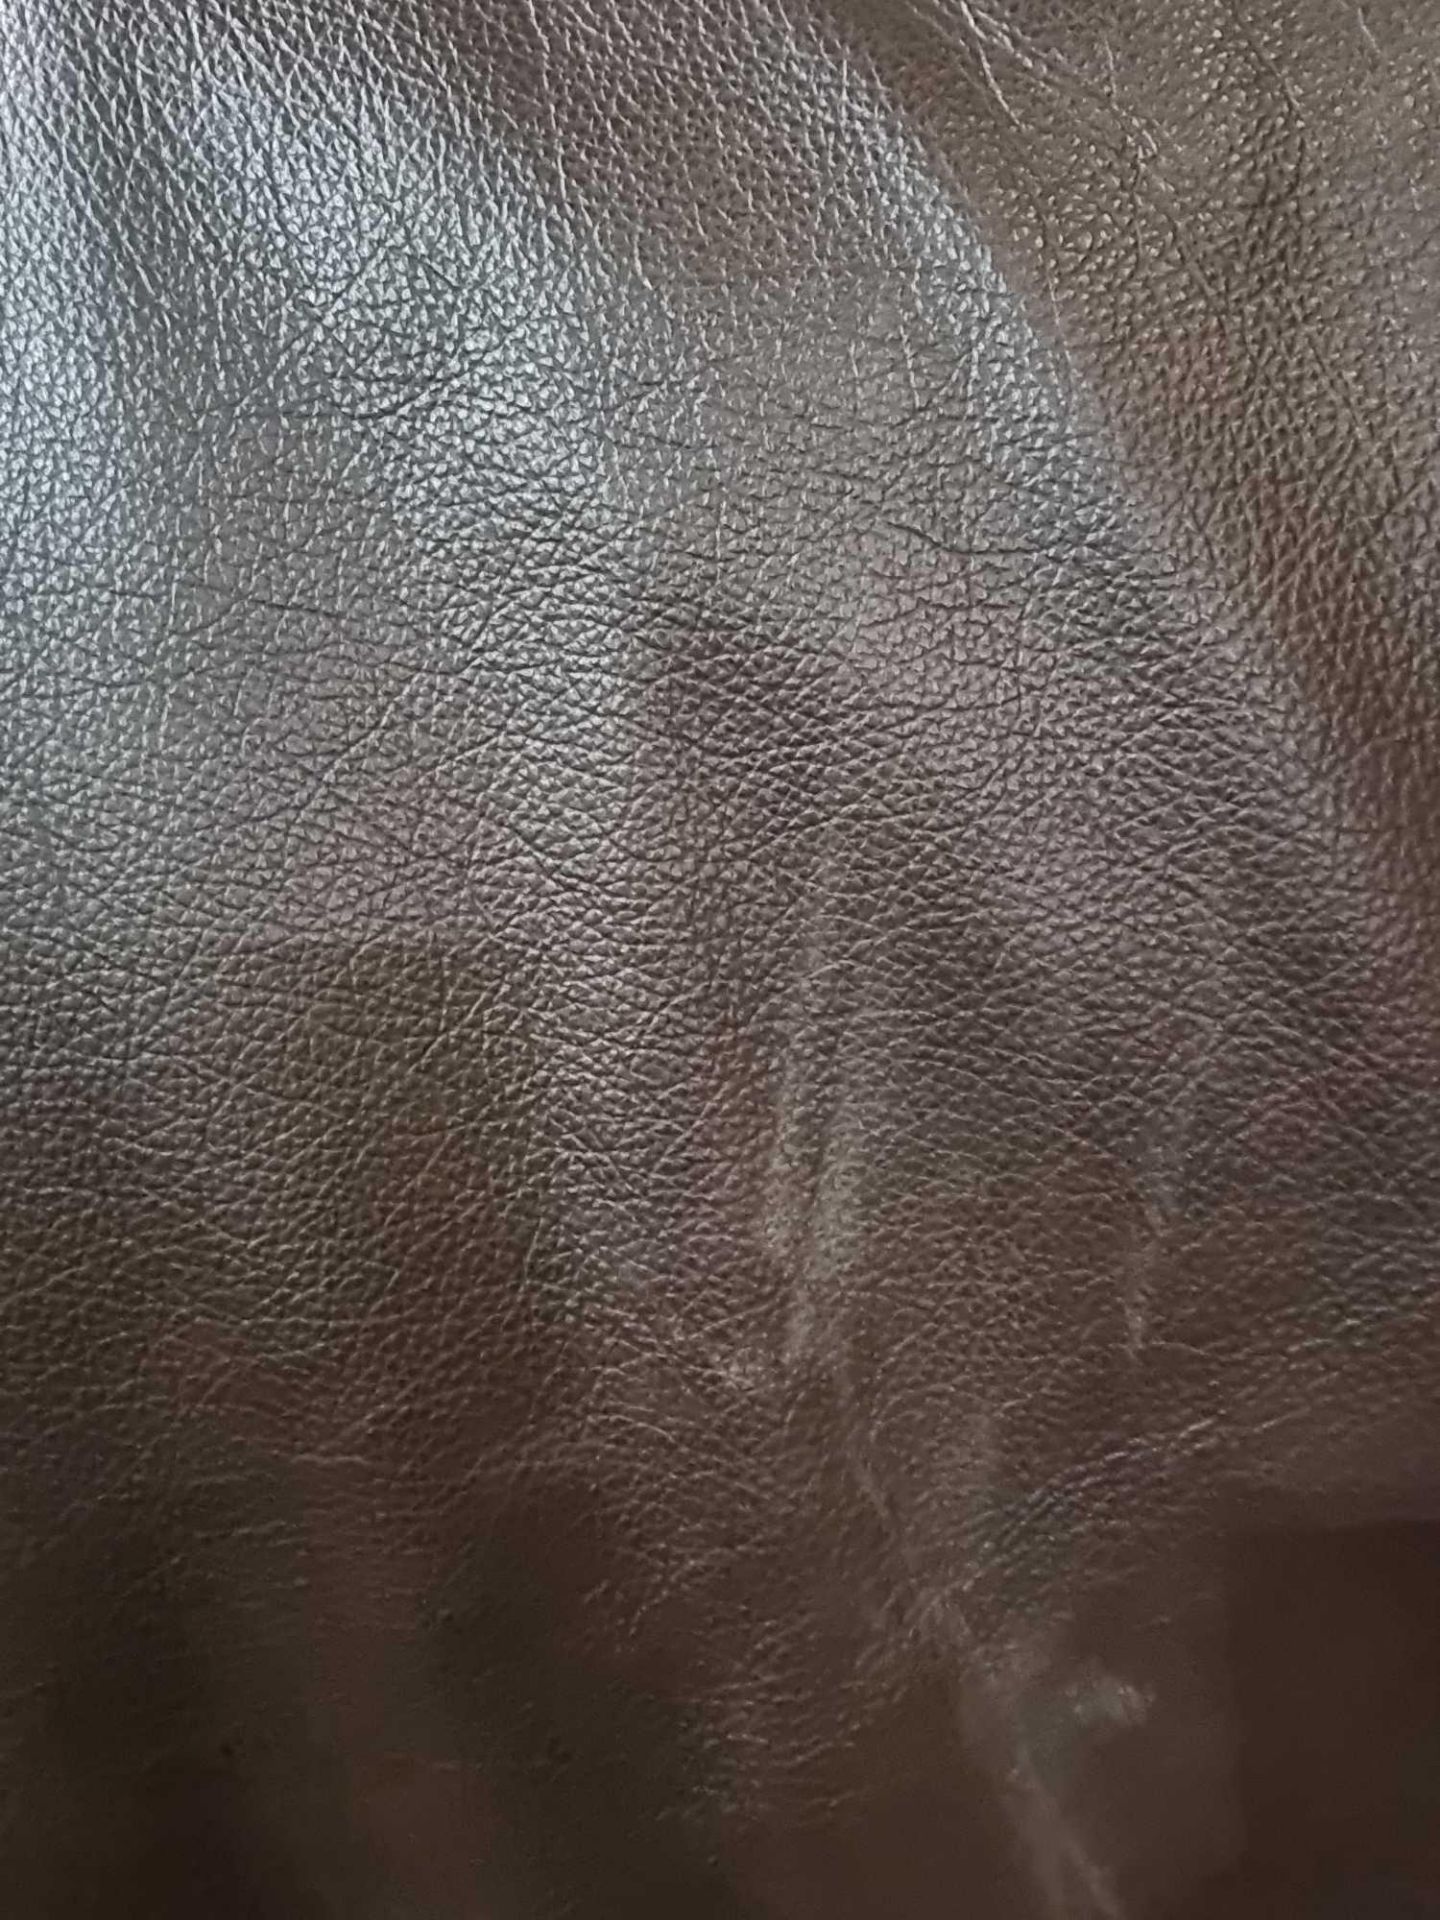 Mastrotto Hudson Chocolate Leather Hide approximately 3 74M2 2 2 x 1 7cm ( Hide No,241) - Bild 2 aus 2